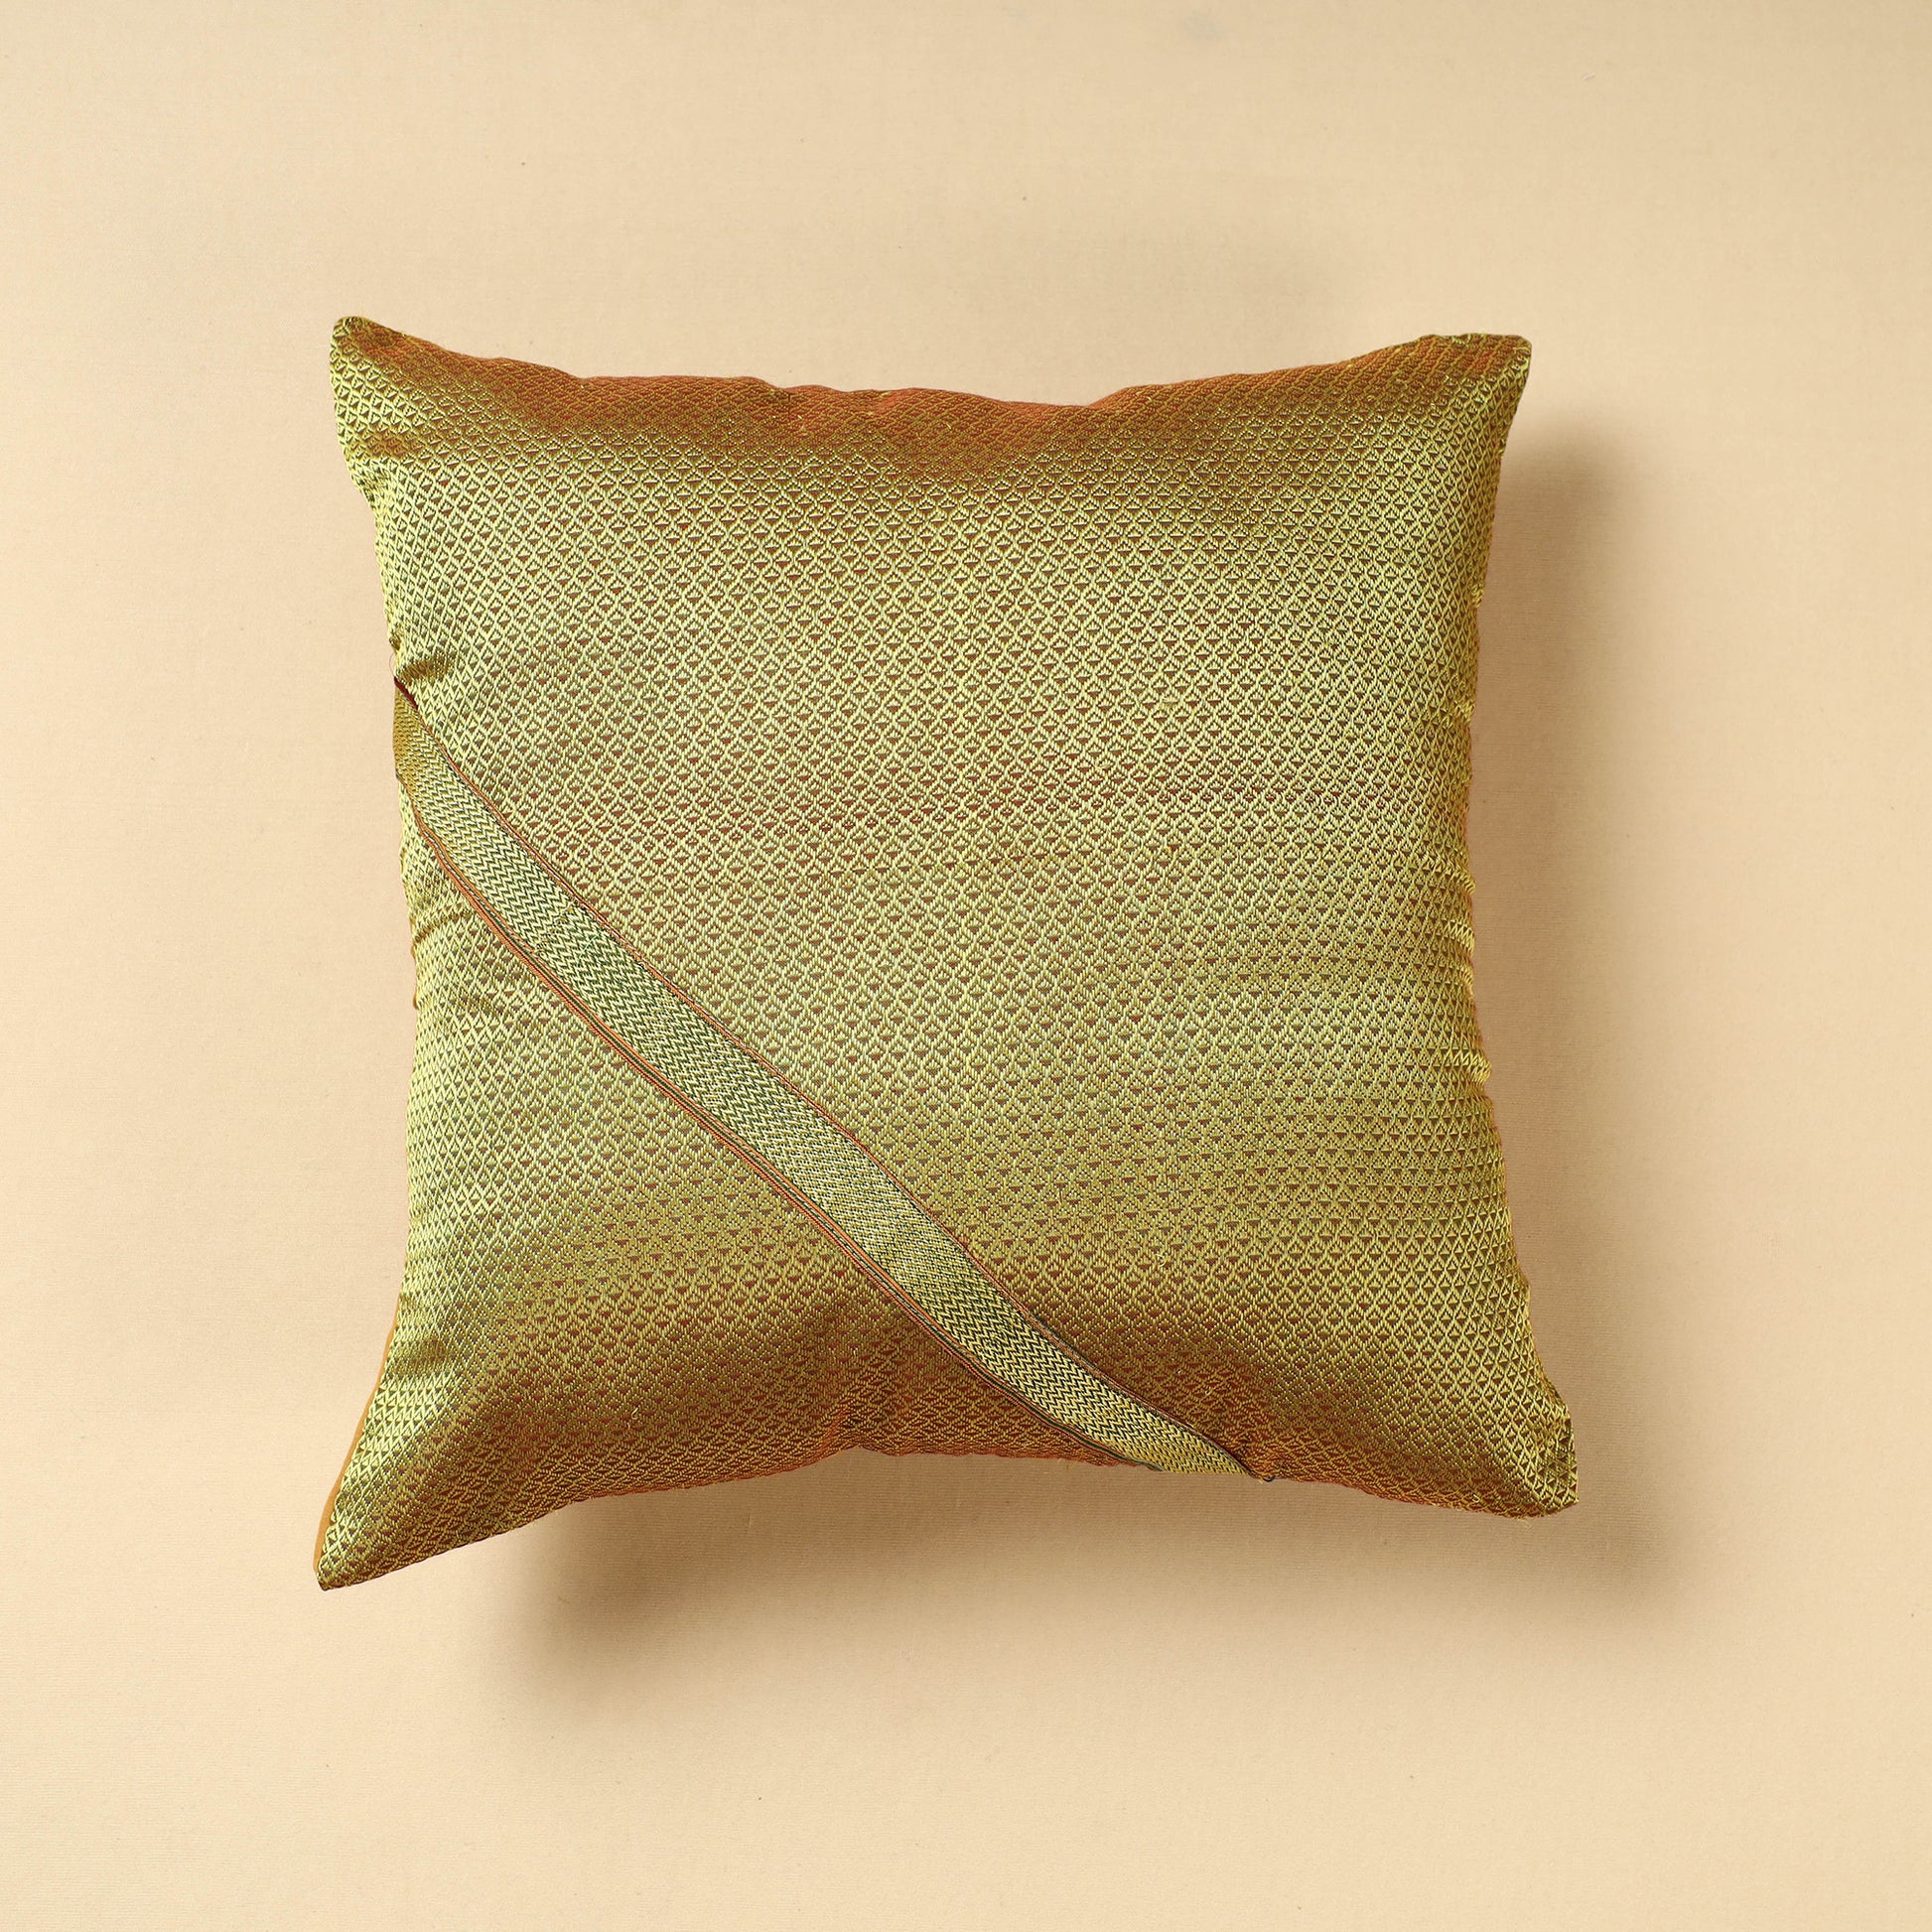 khun cushion cover 